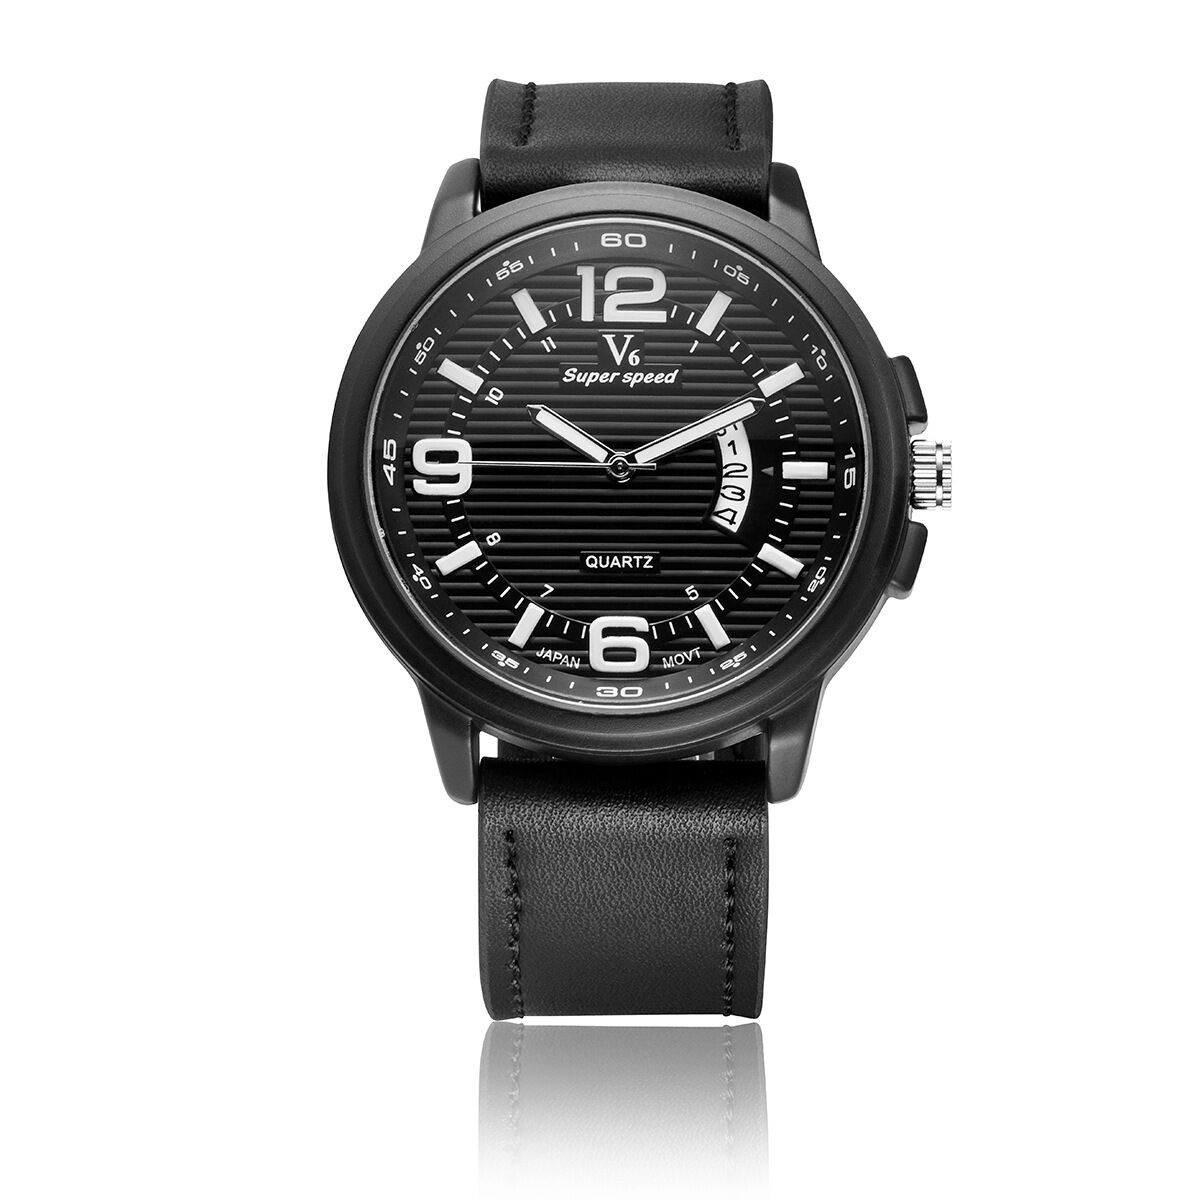 B002 V6 Quartz Movement Silicone Band/Leather Band Watch